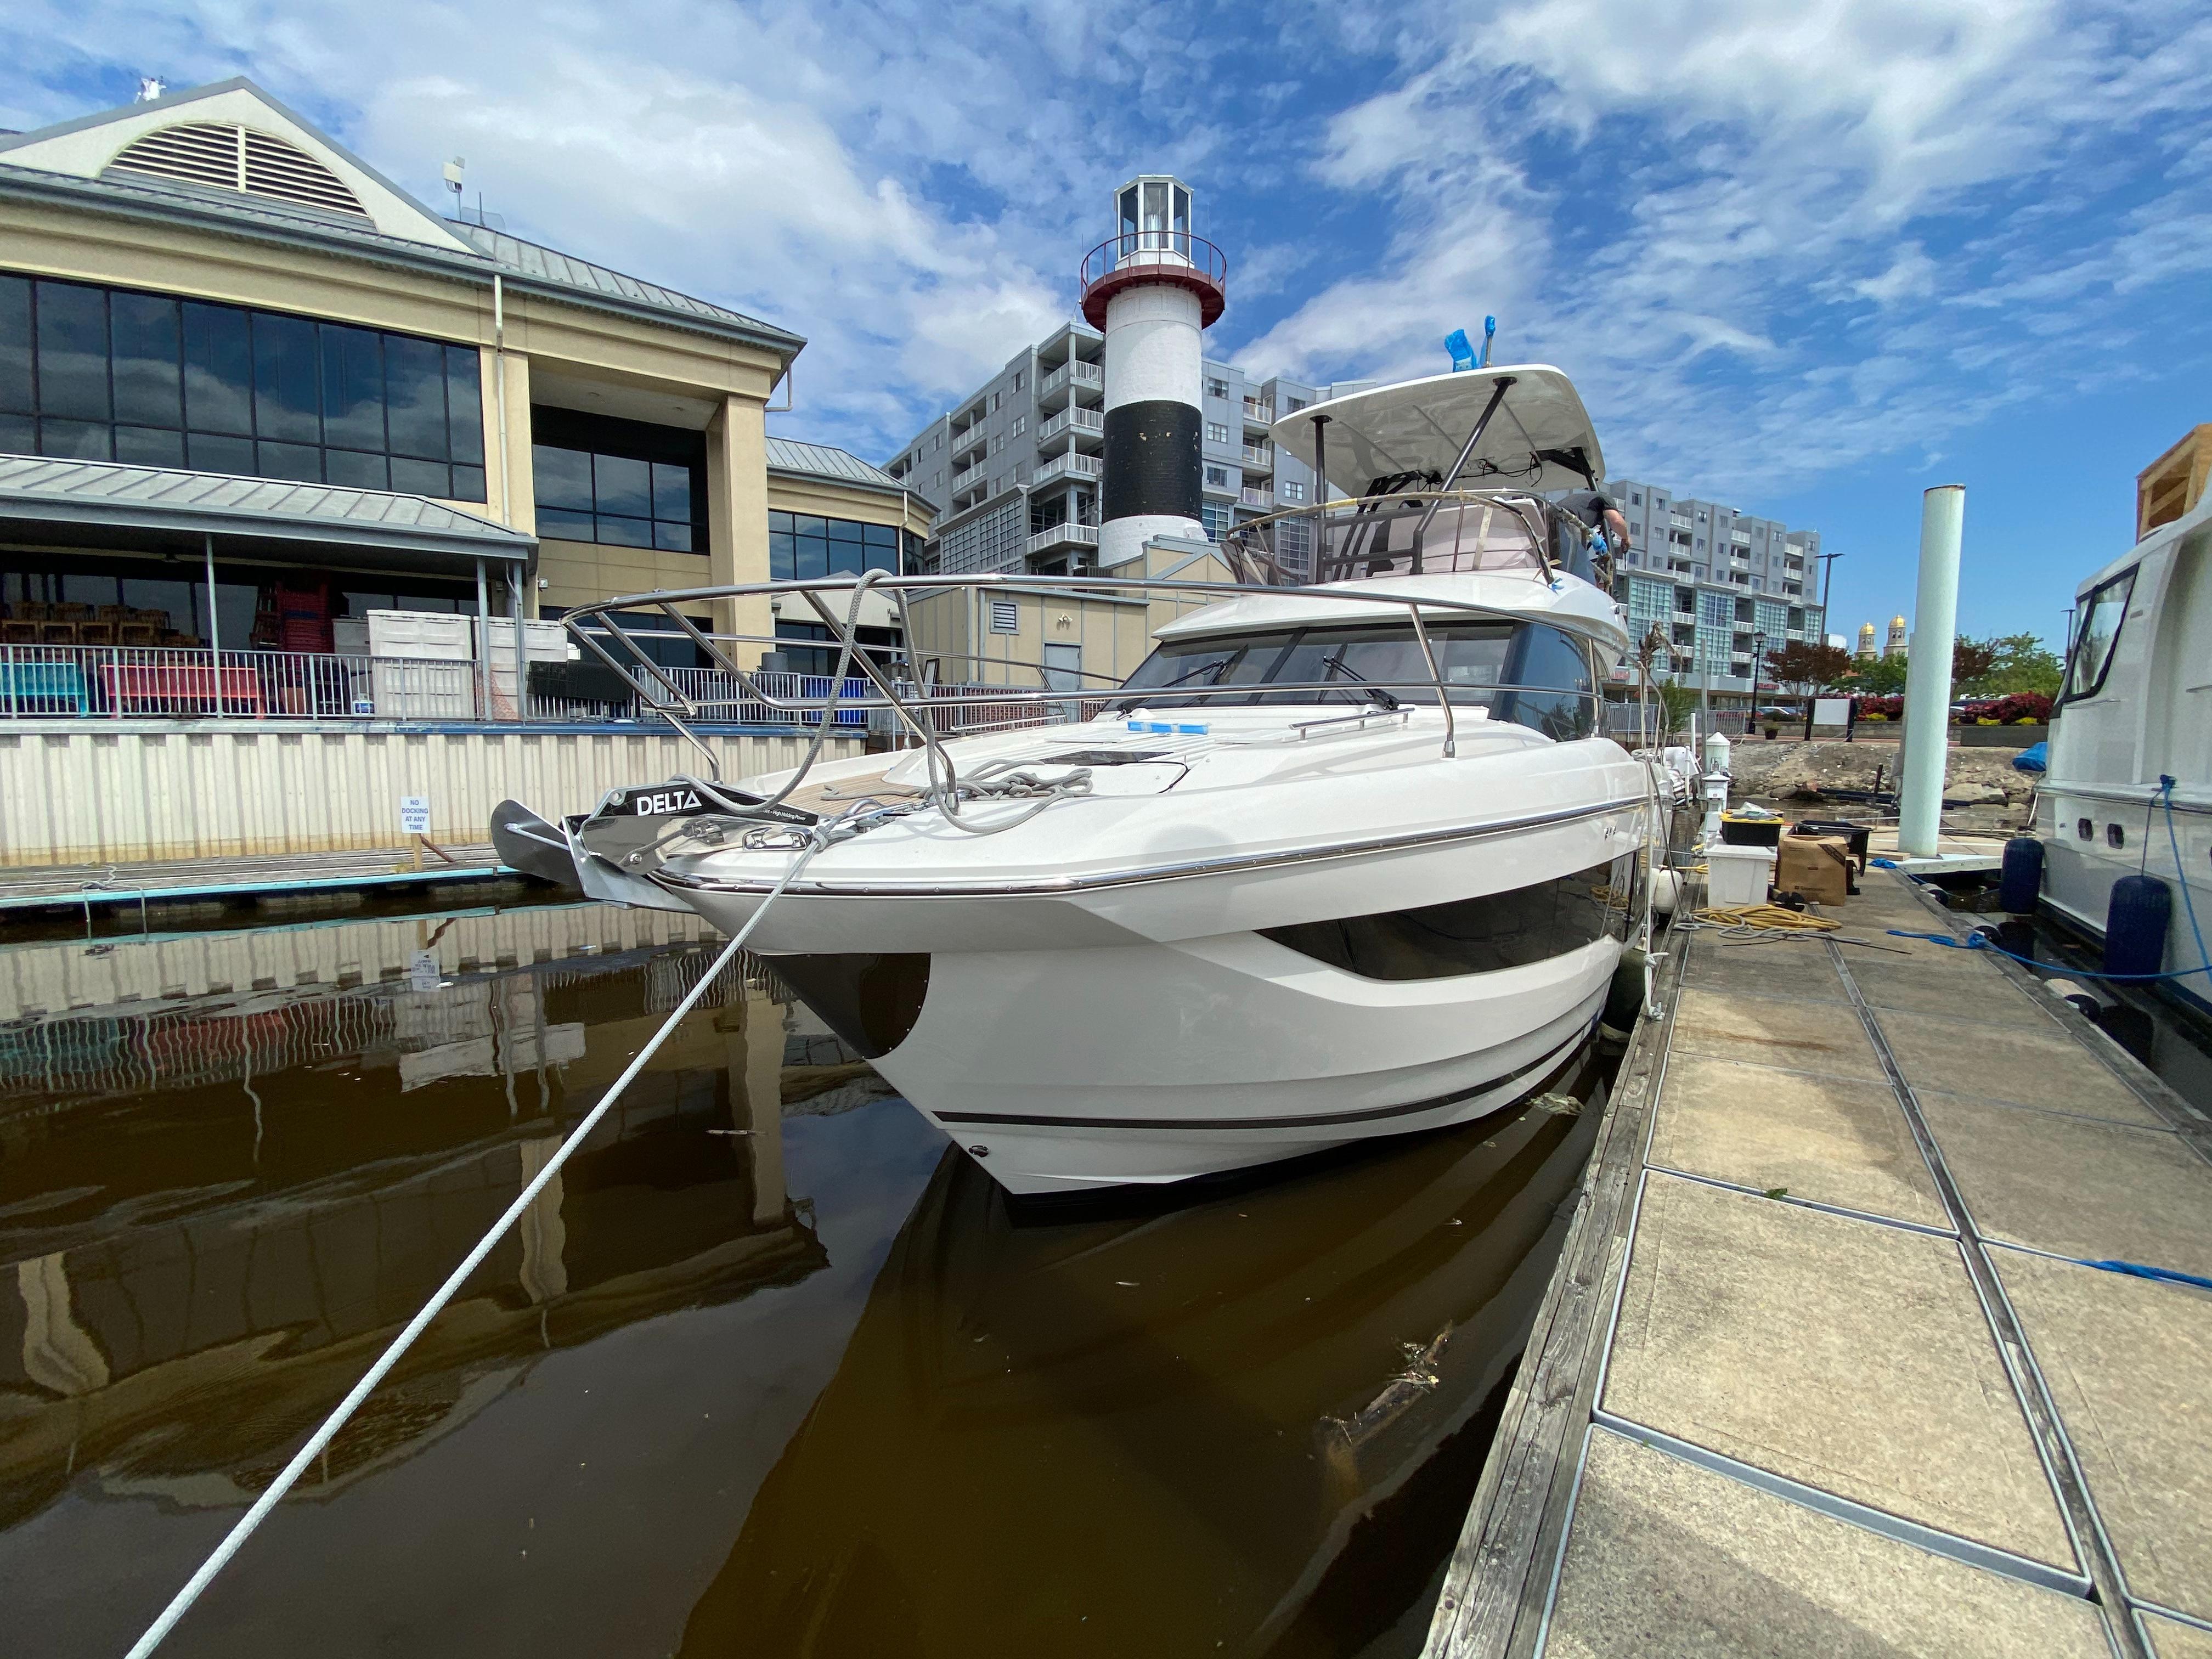 Yacht Listing Details | Chesapeake Yacht Center | Baltimore, Maryland